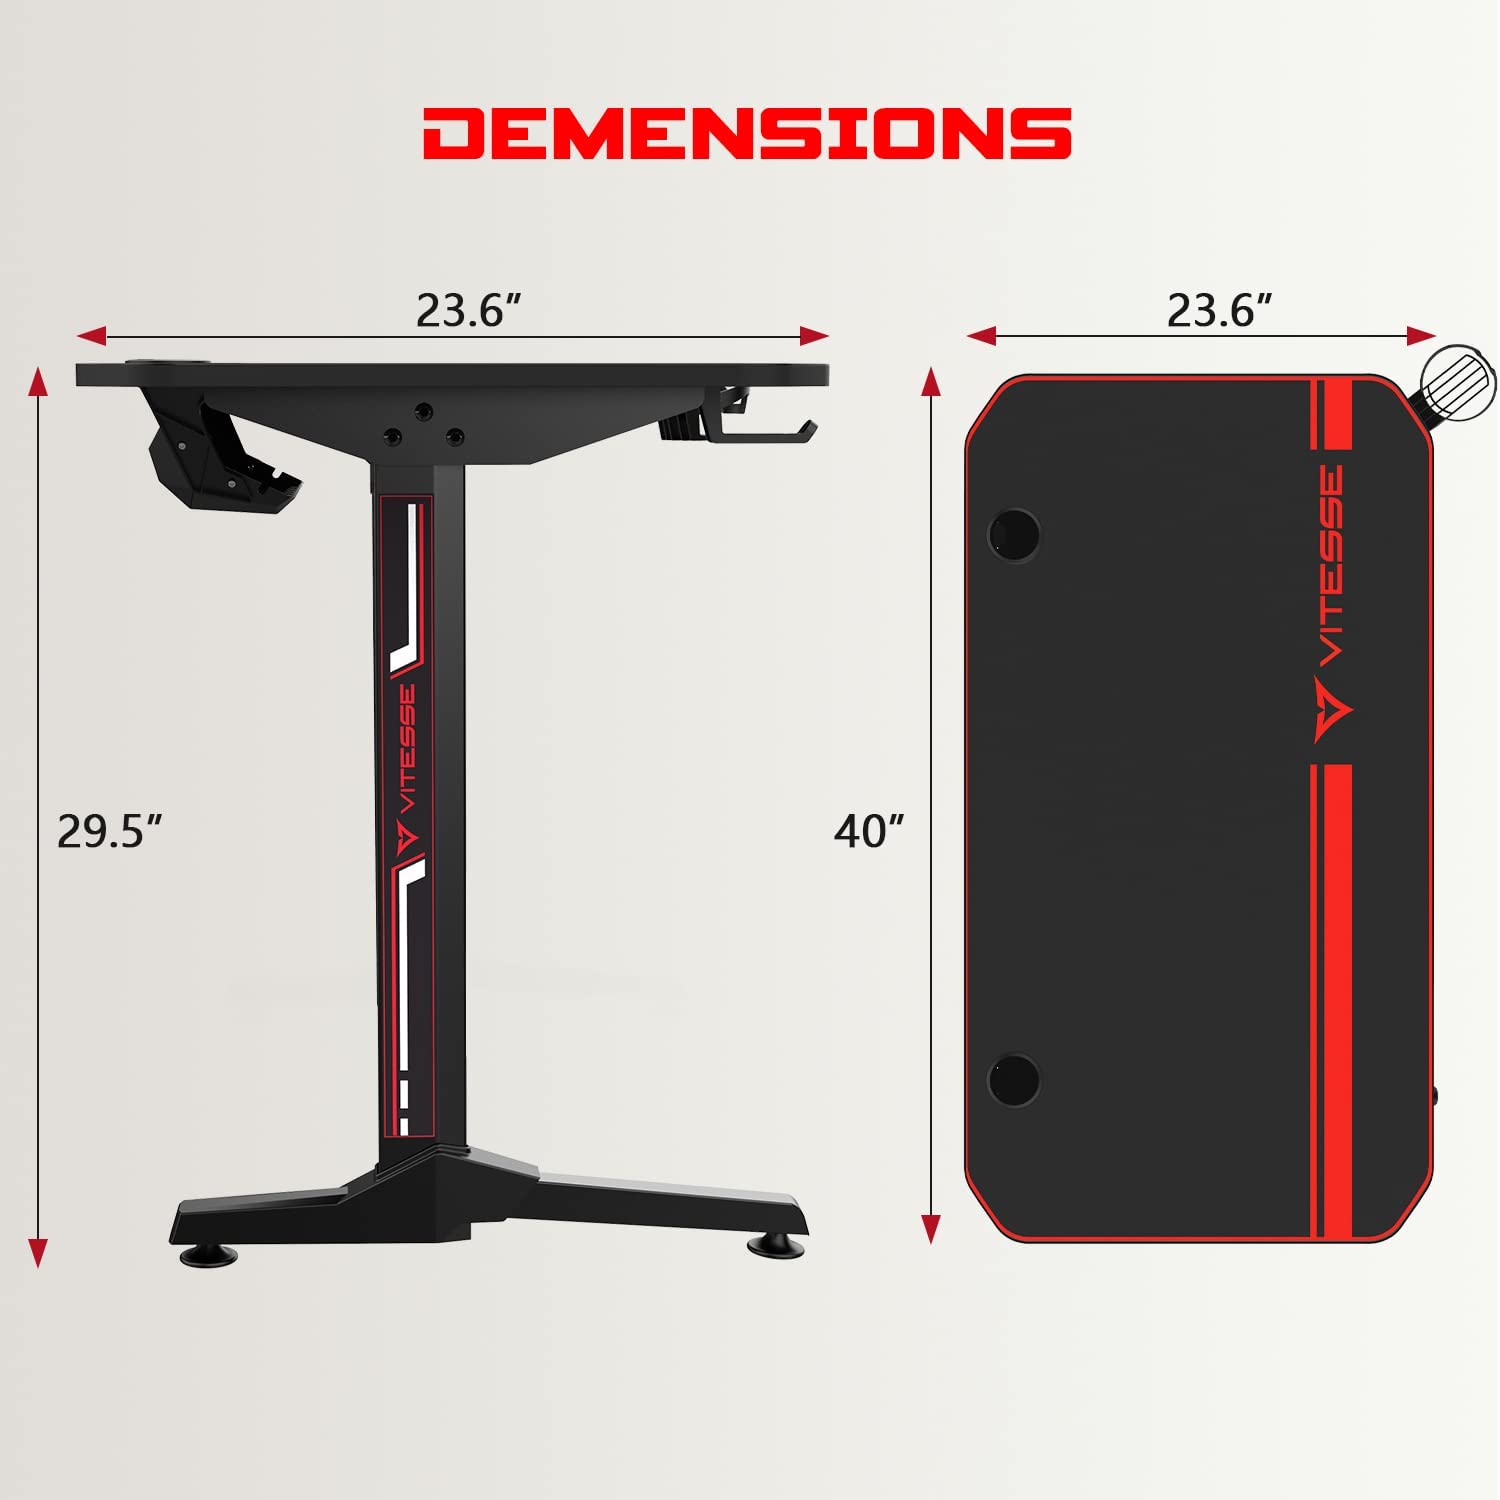 Vitesse 40 inches Gaming Desk Dimension